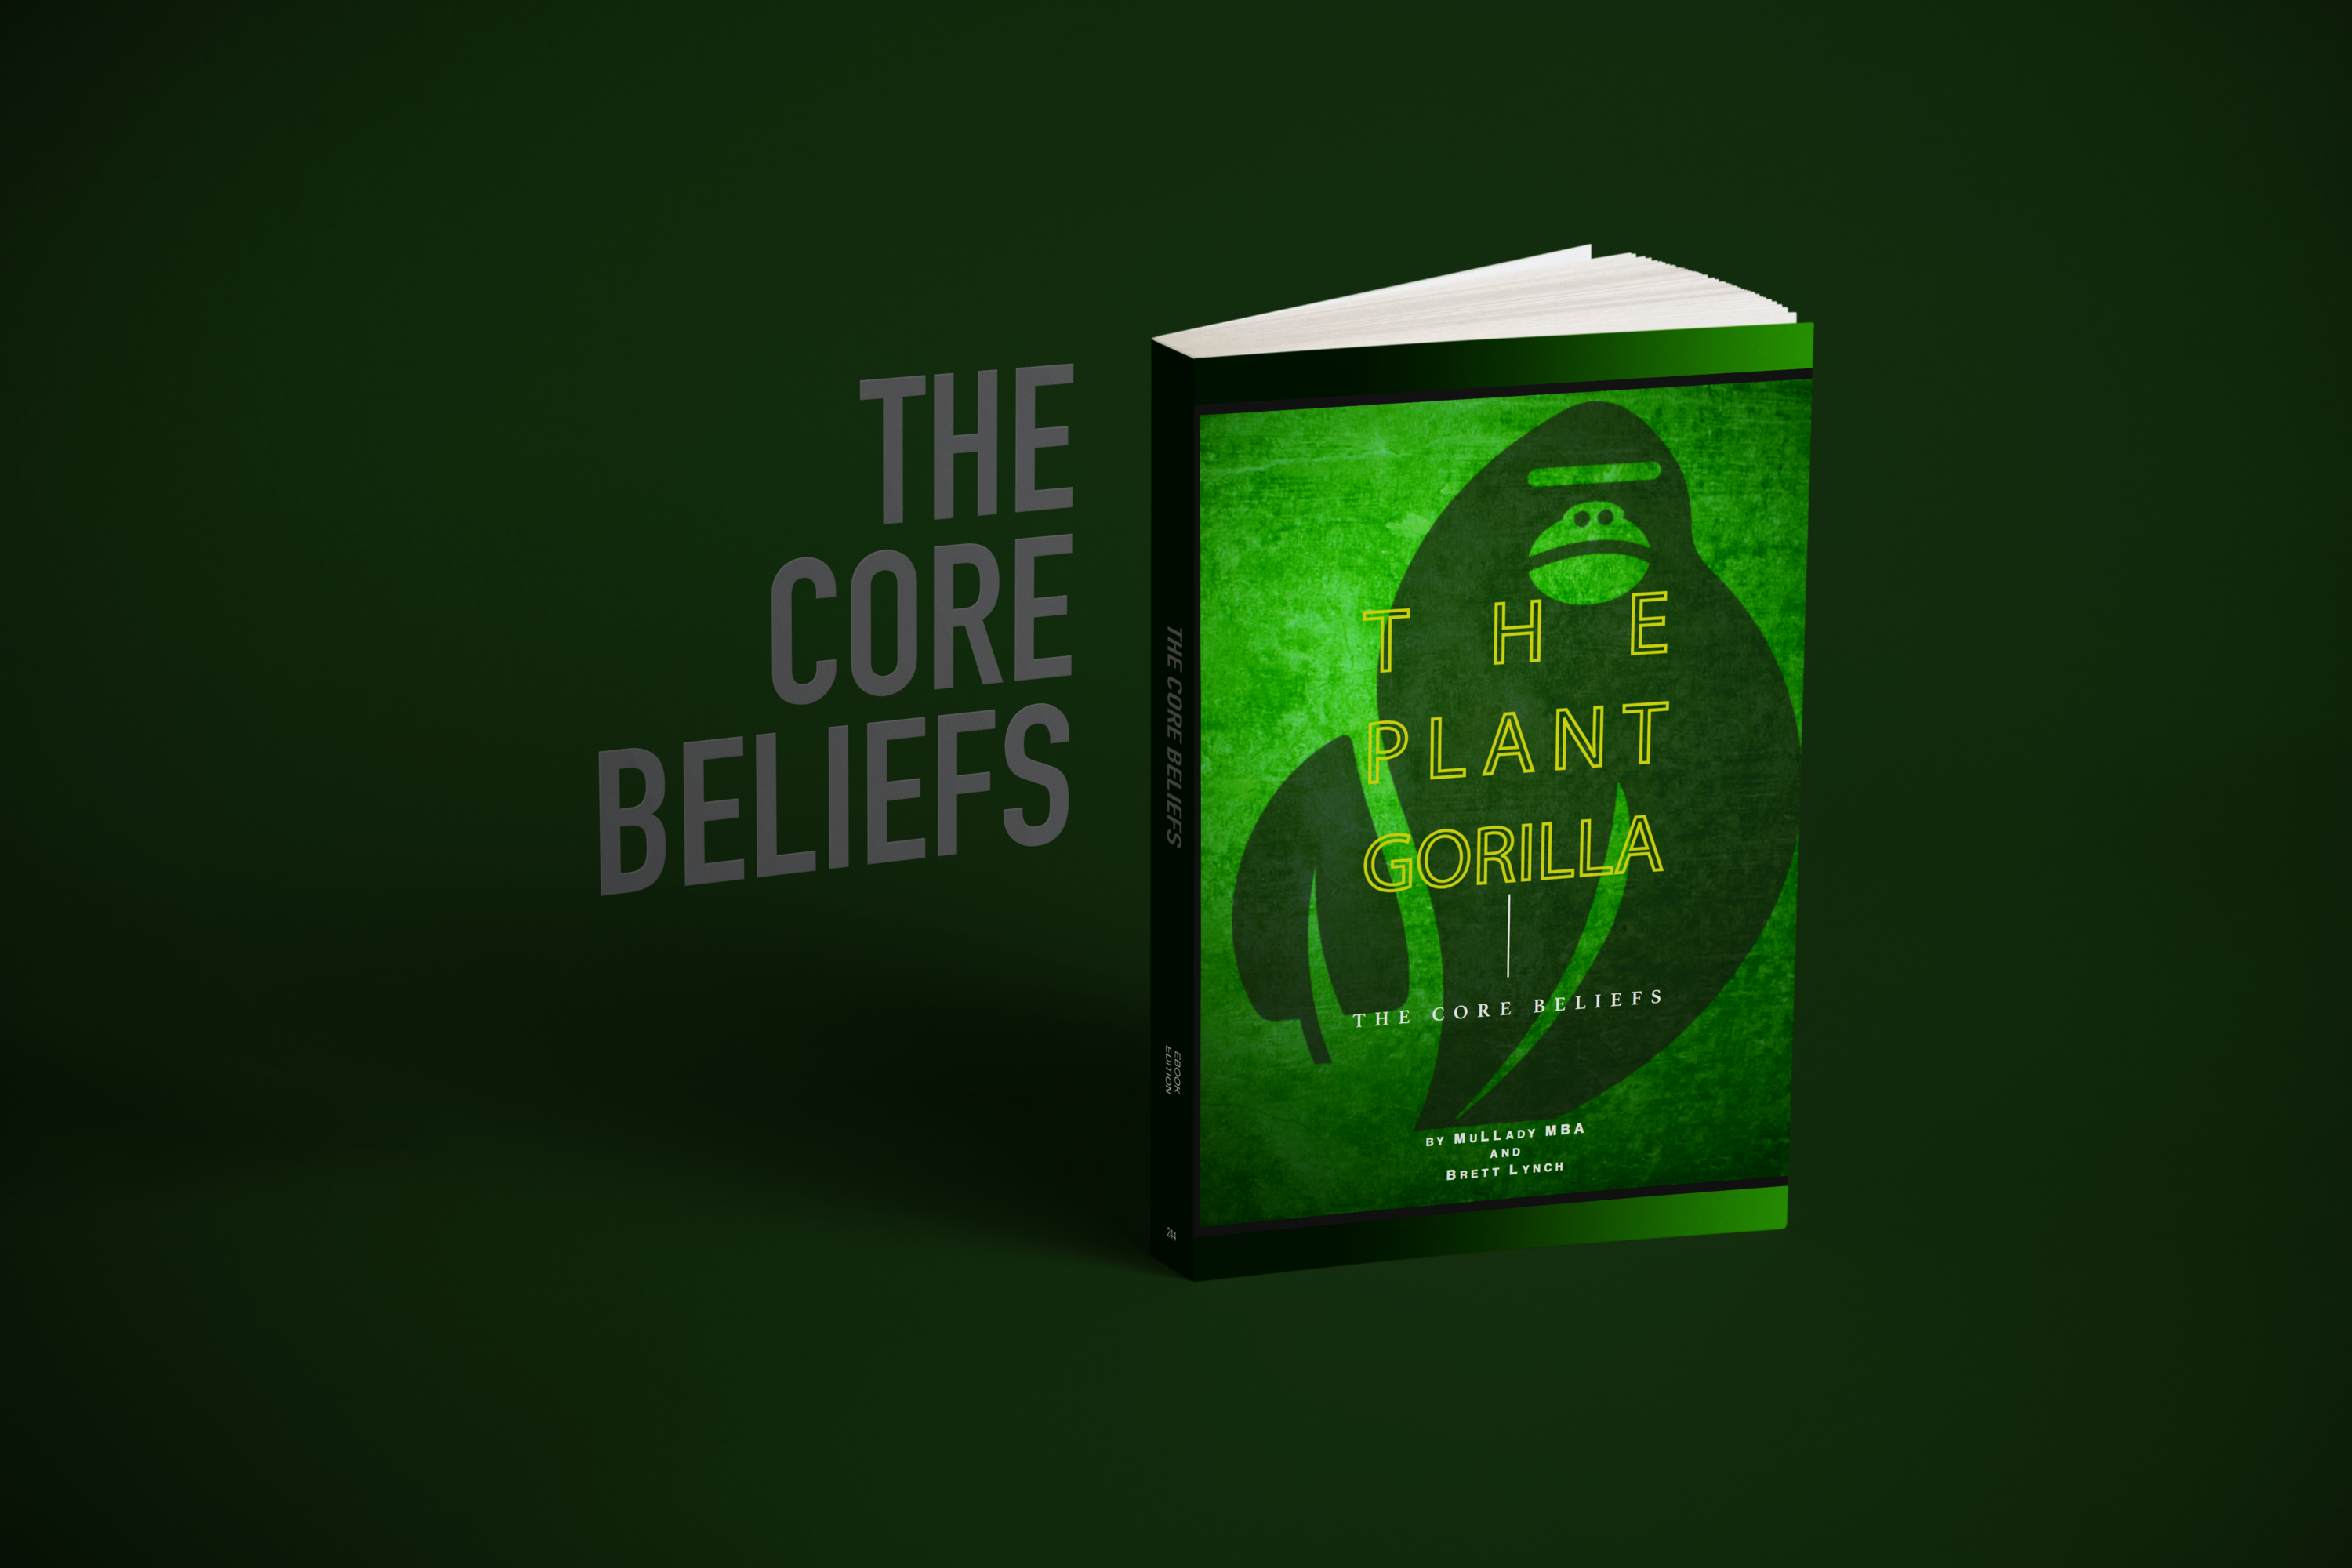 The Plant Gorilla - The Core Beliefs